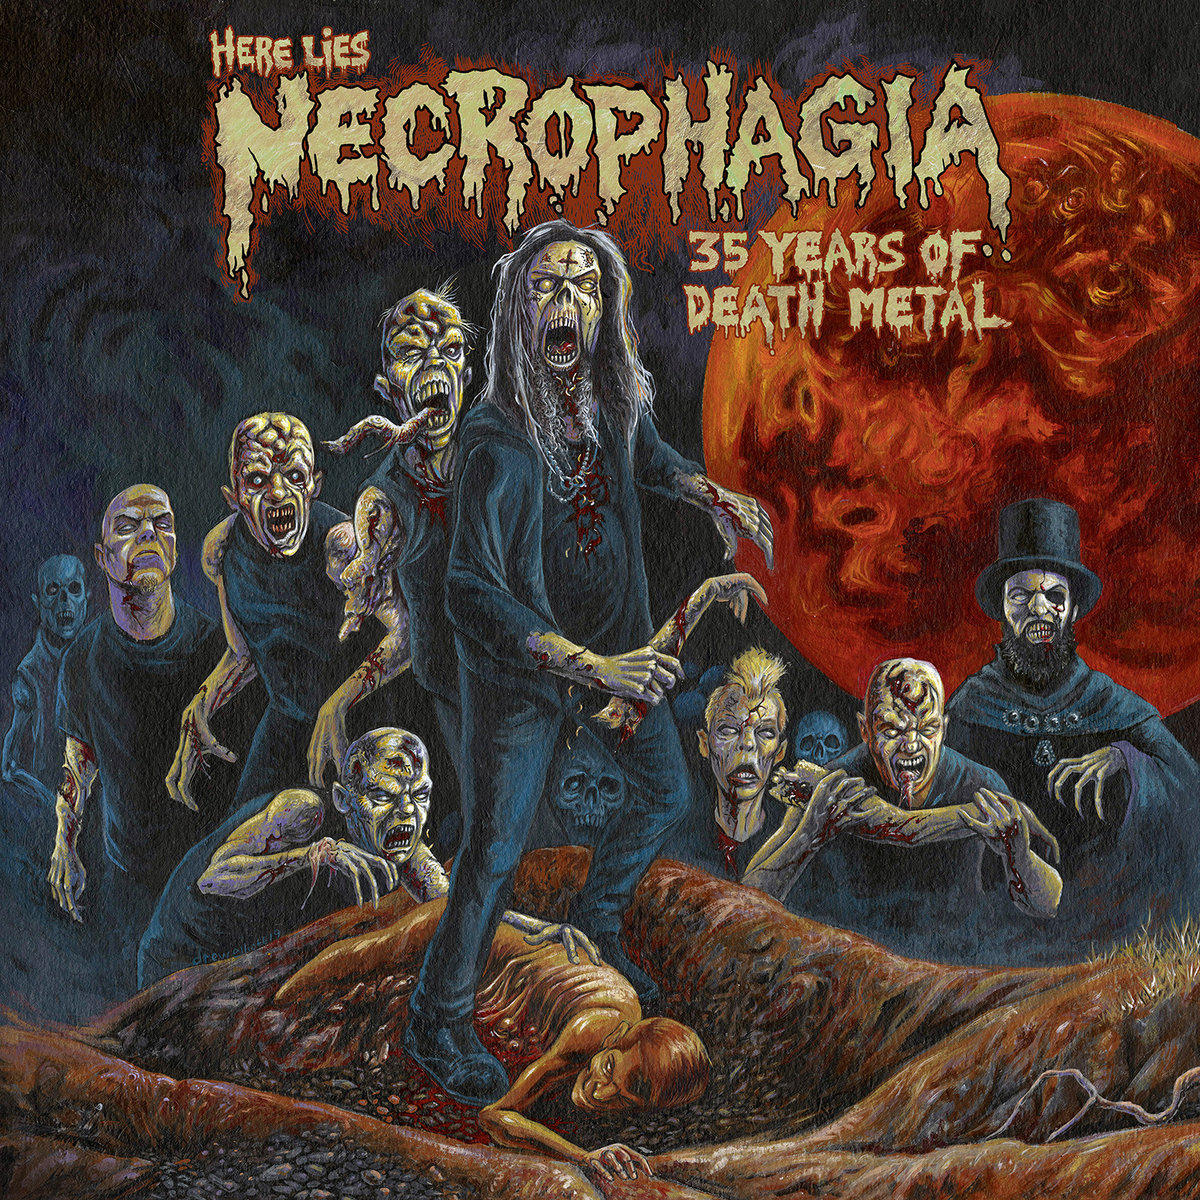 Necrophagia---Here-Lies-Necrophagia-35-Years-Of-Death